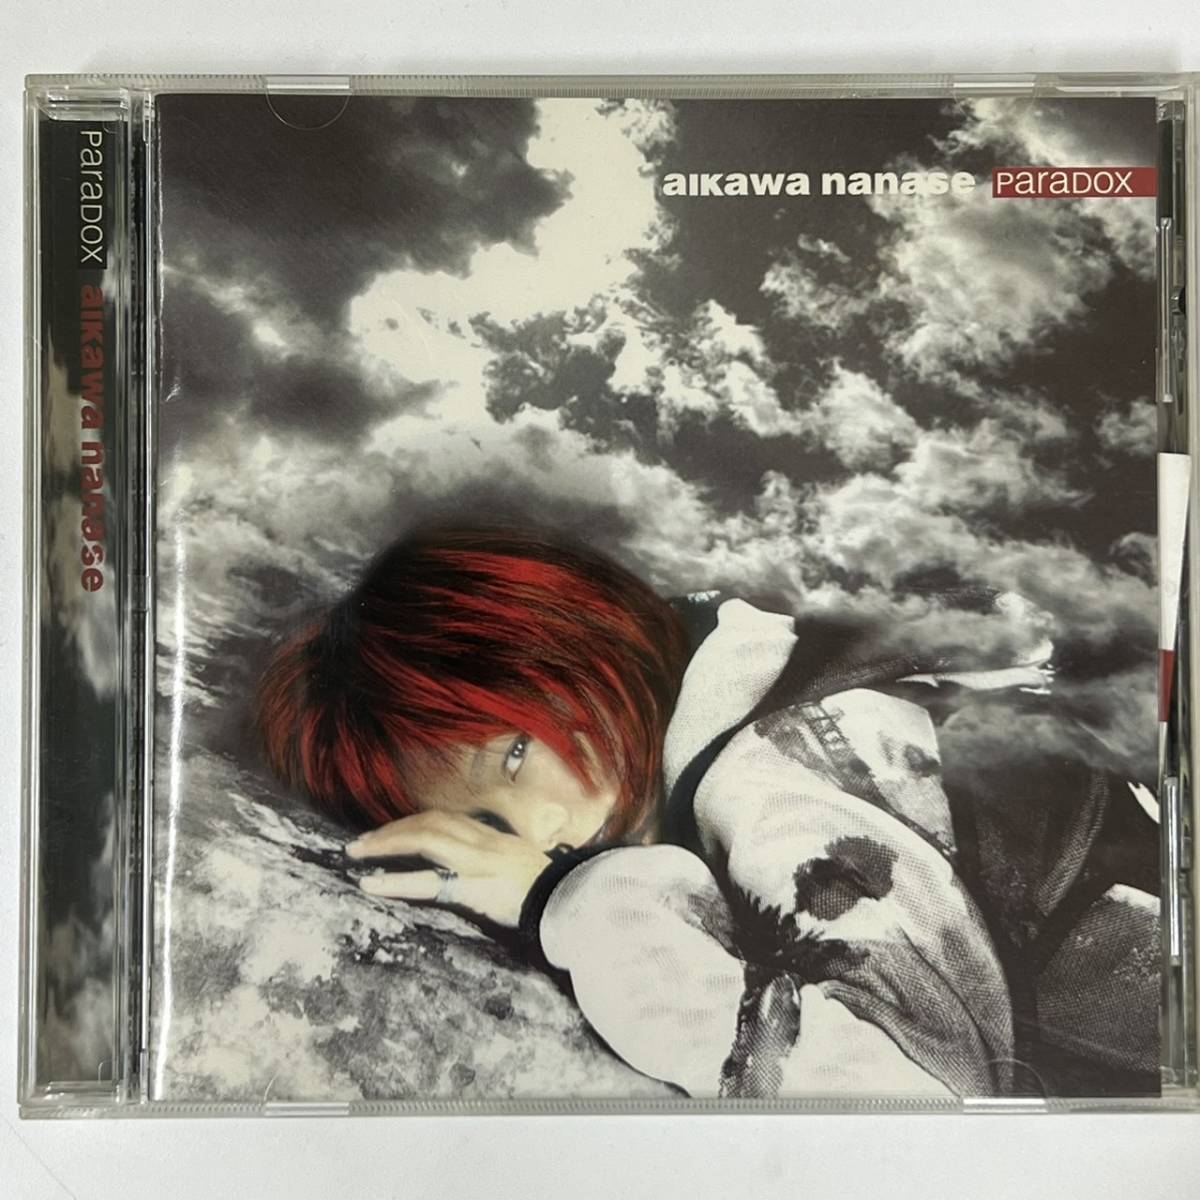 ** очень редкий ** Aikawa Nanase CD альбом ** ParaDox alkawa nanase ** HD-444